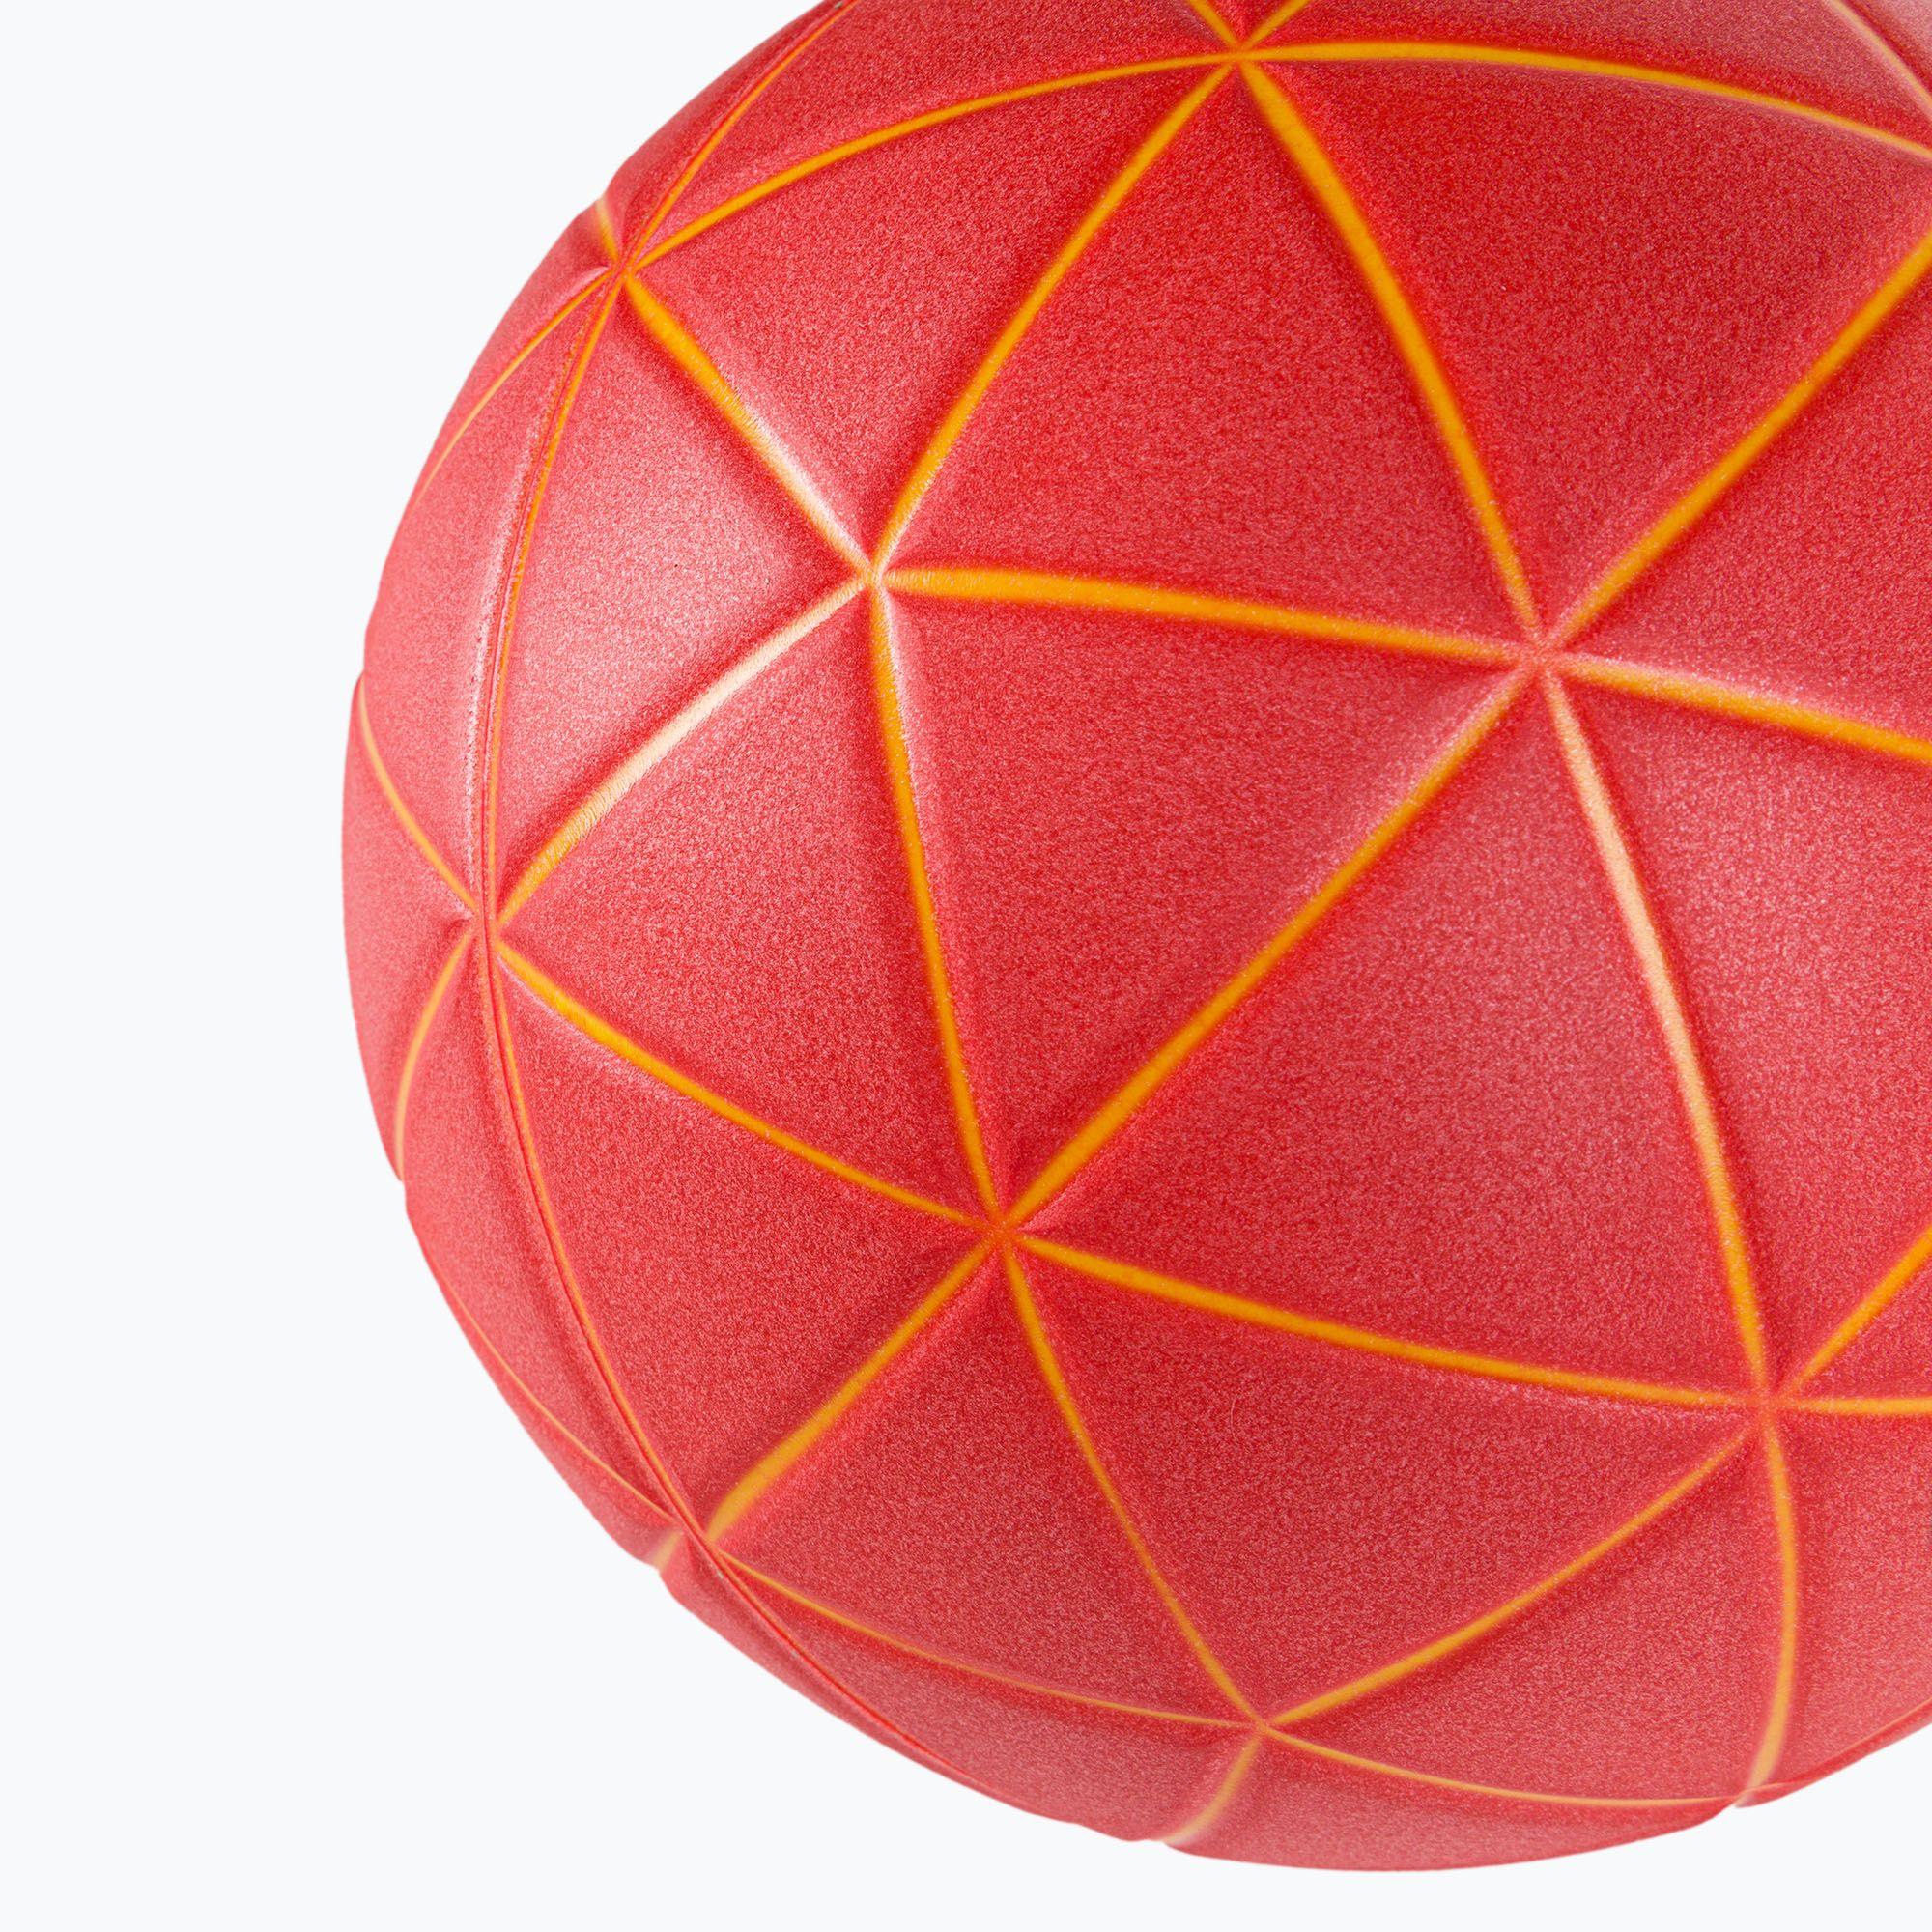 Wielt: Strandhandball